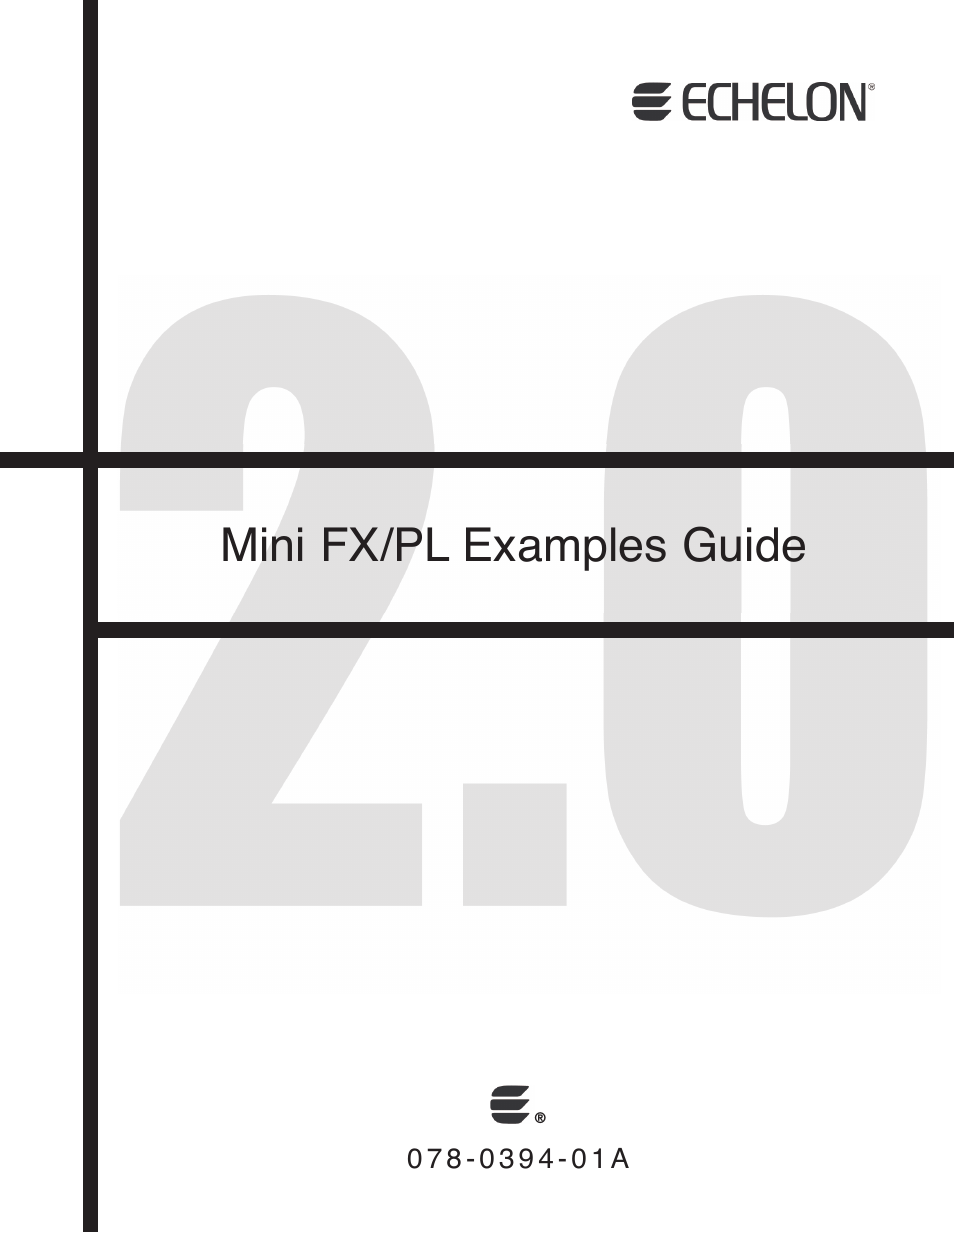 Mini FX/PL Examples